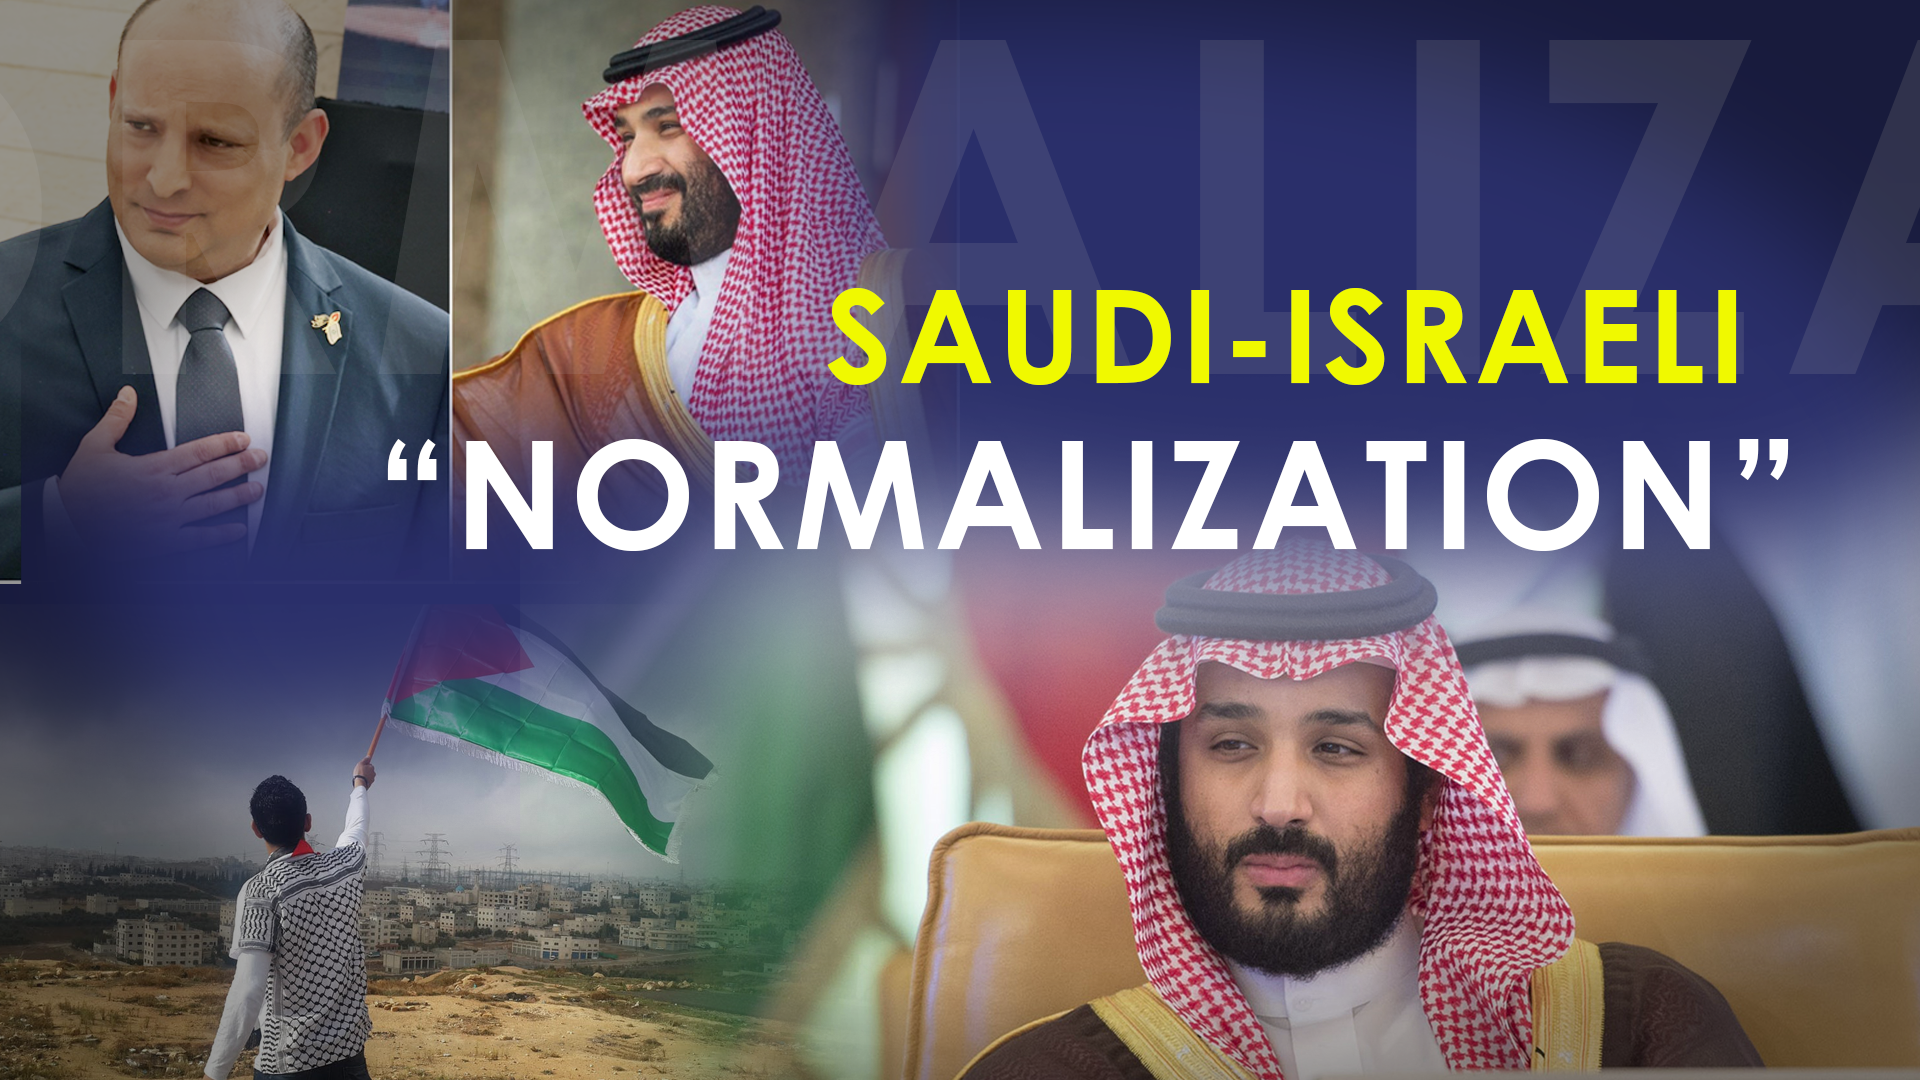 Saudi-Israeli “normalization”